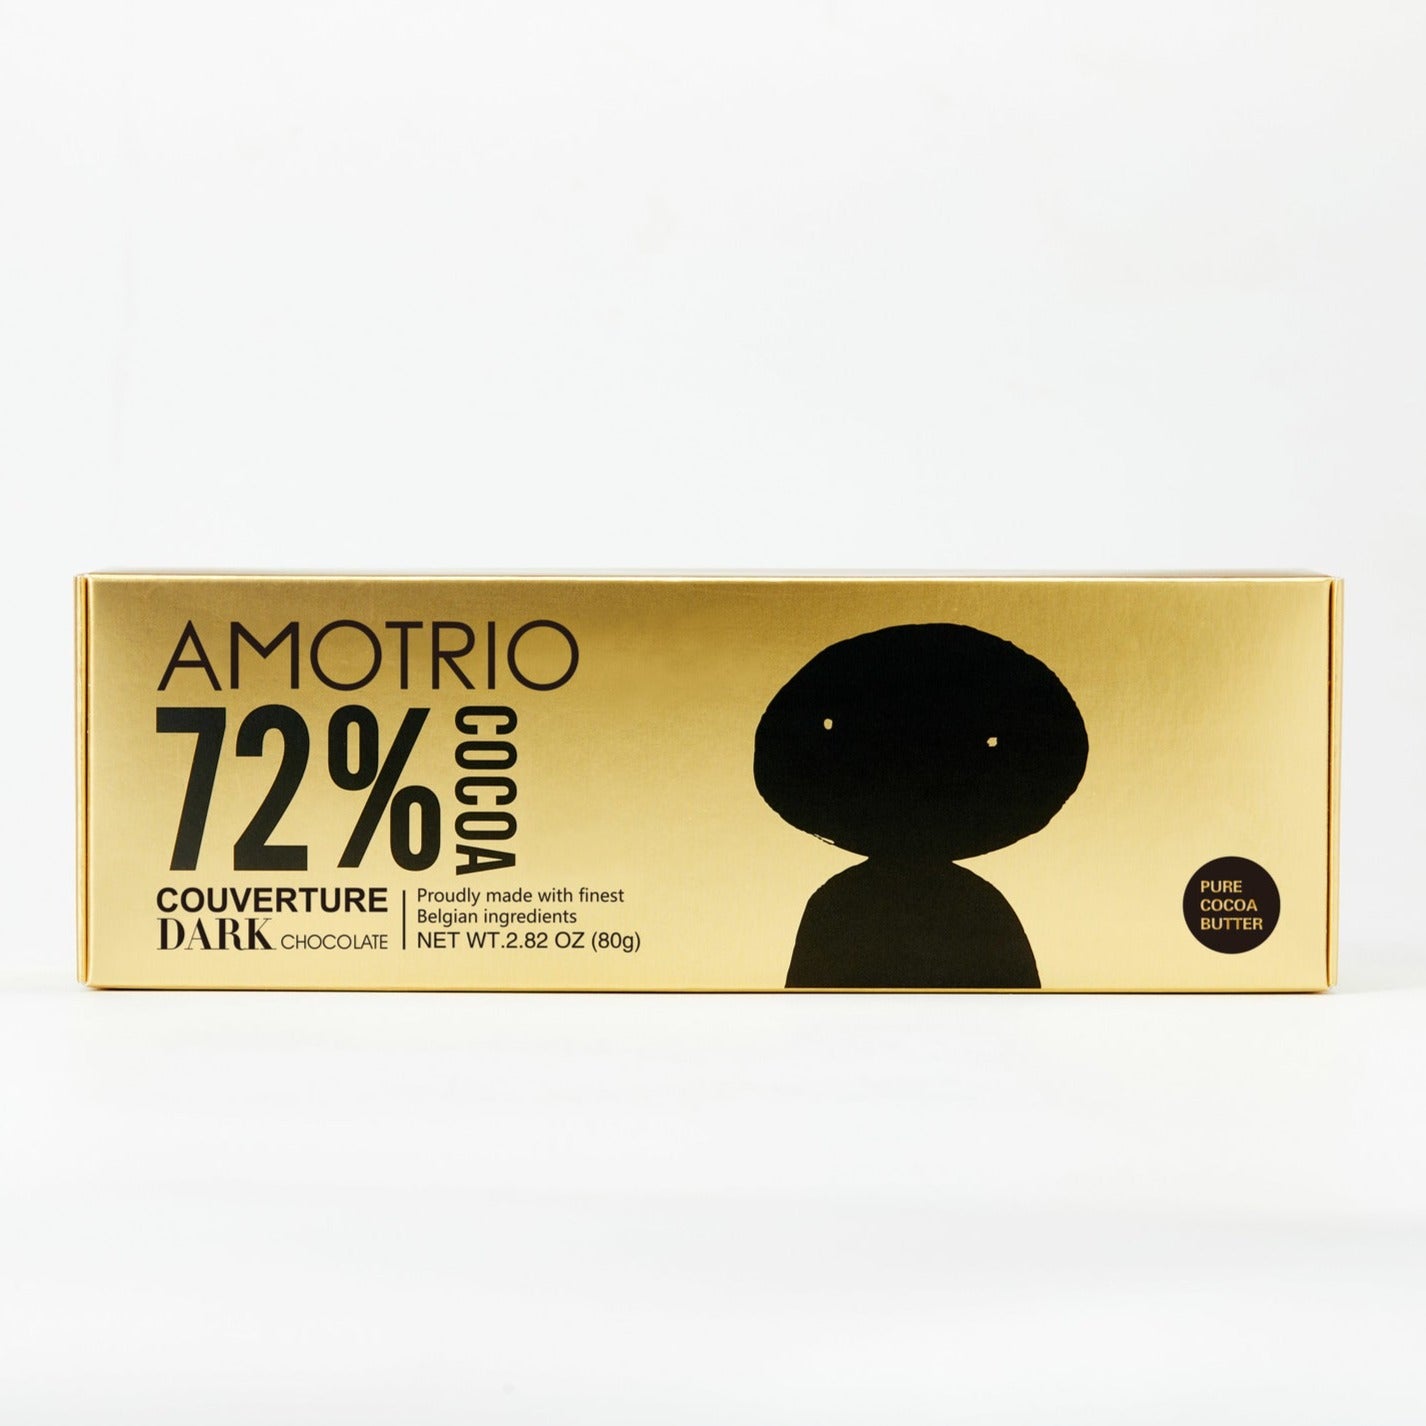 Amotrio 72% Couverture Dark Chocolate